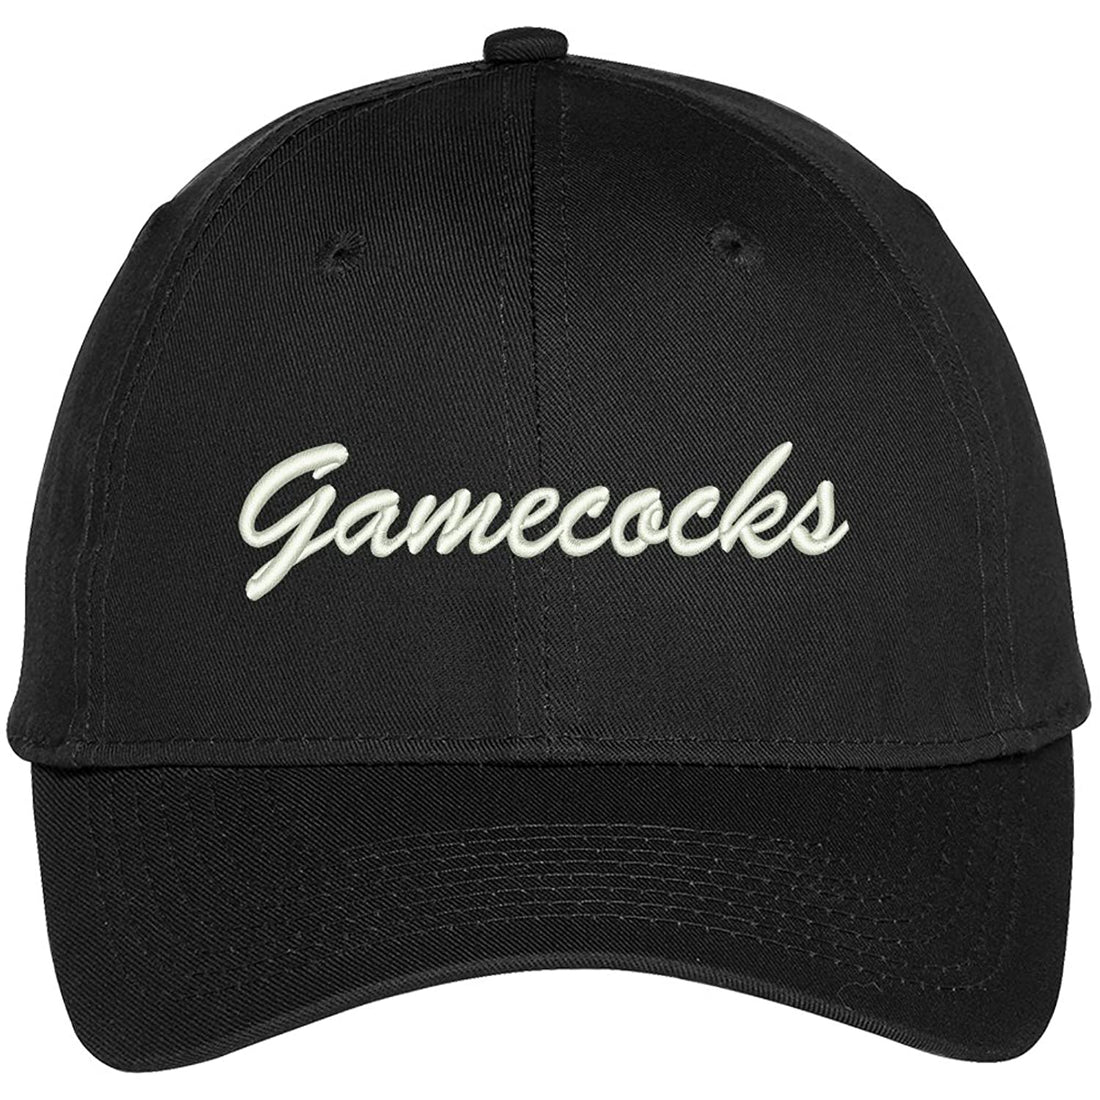 Trendy Apparel Shop Gamecocks Embroidered Team Nickname Mascot Cap